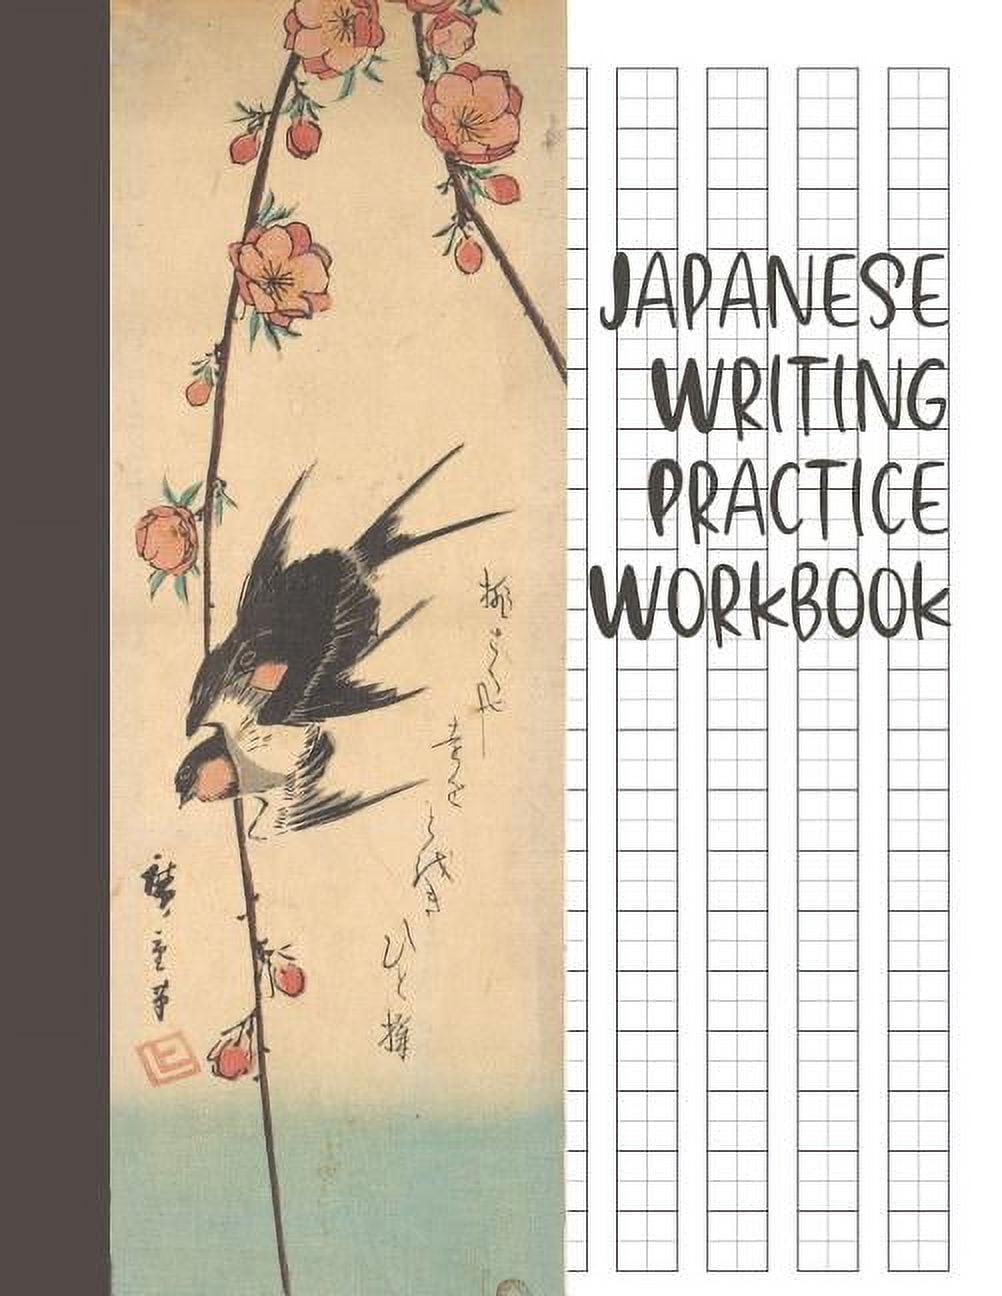 Japanese Writing Practice Book : Genkouyoushi Paper, Japanese Character  Kanji Hiragana Katakana Language Workbook Study, Kanji Writing Practice,  Tsuchiya Koitsu, Japanese Art (8.5 x 11 inches, 120 pages) (Paperback) 